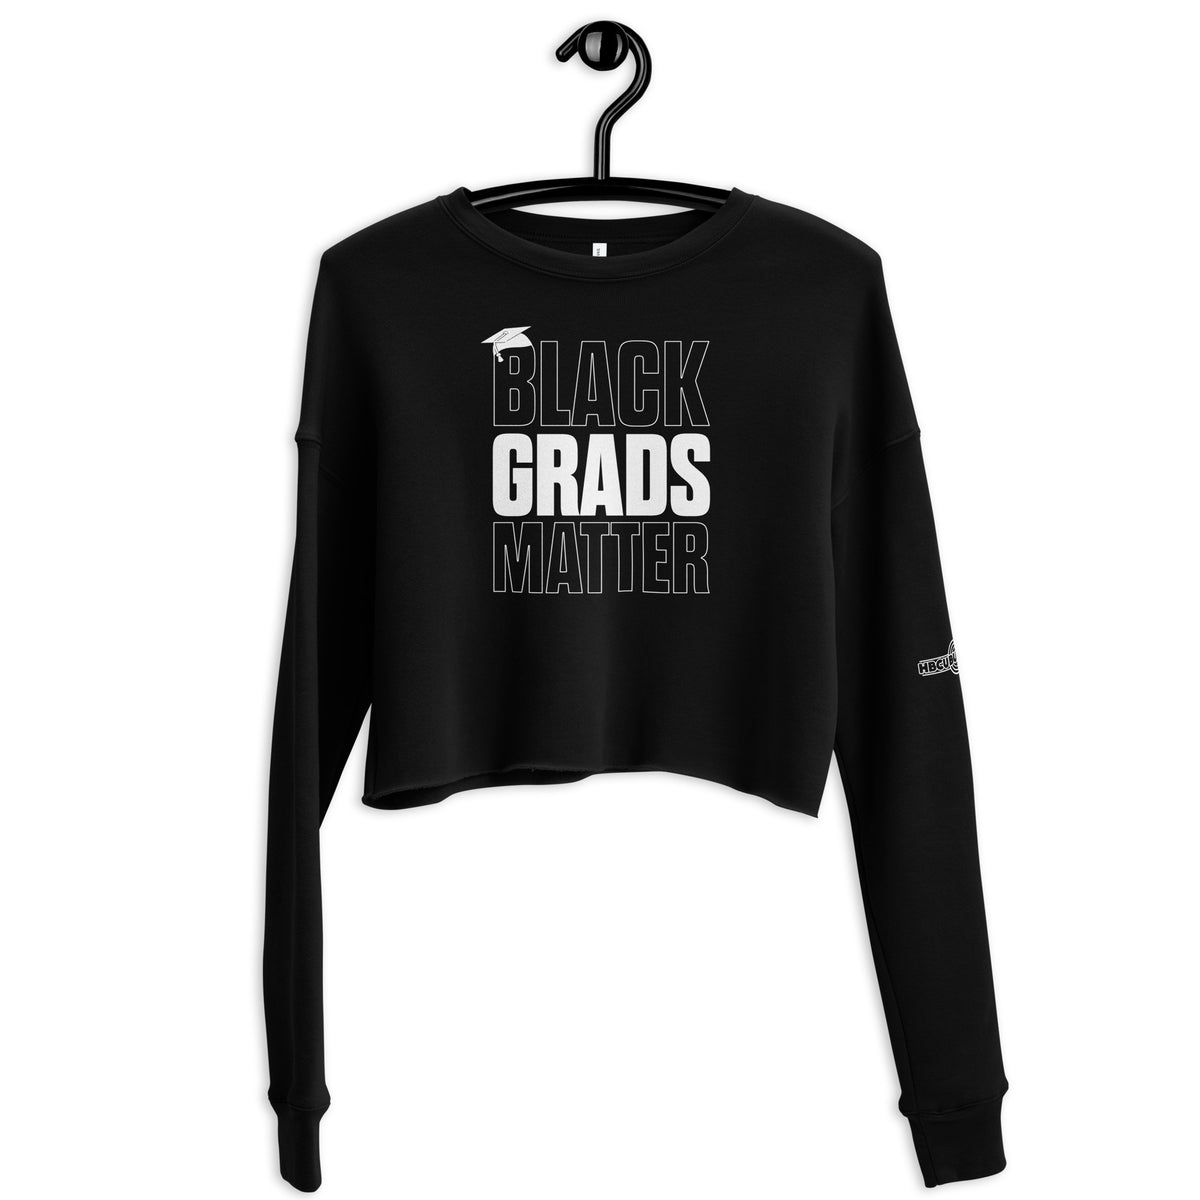 Black Grads Matter Crop Sweatshirt - HBCU Buzz Shop